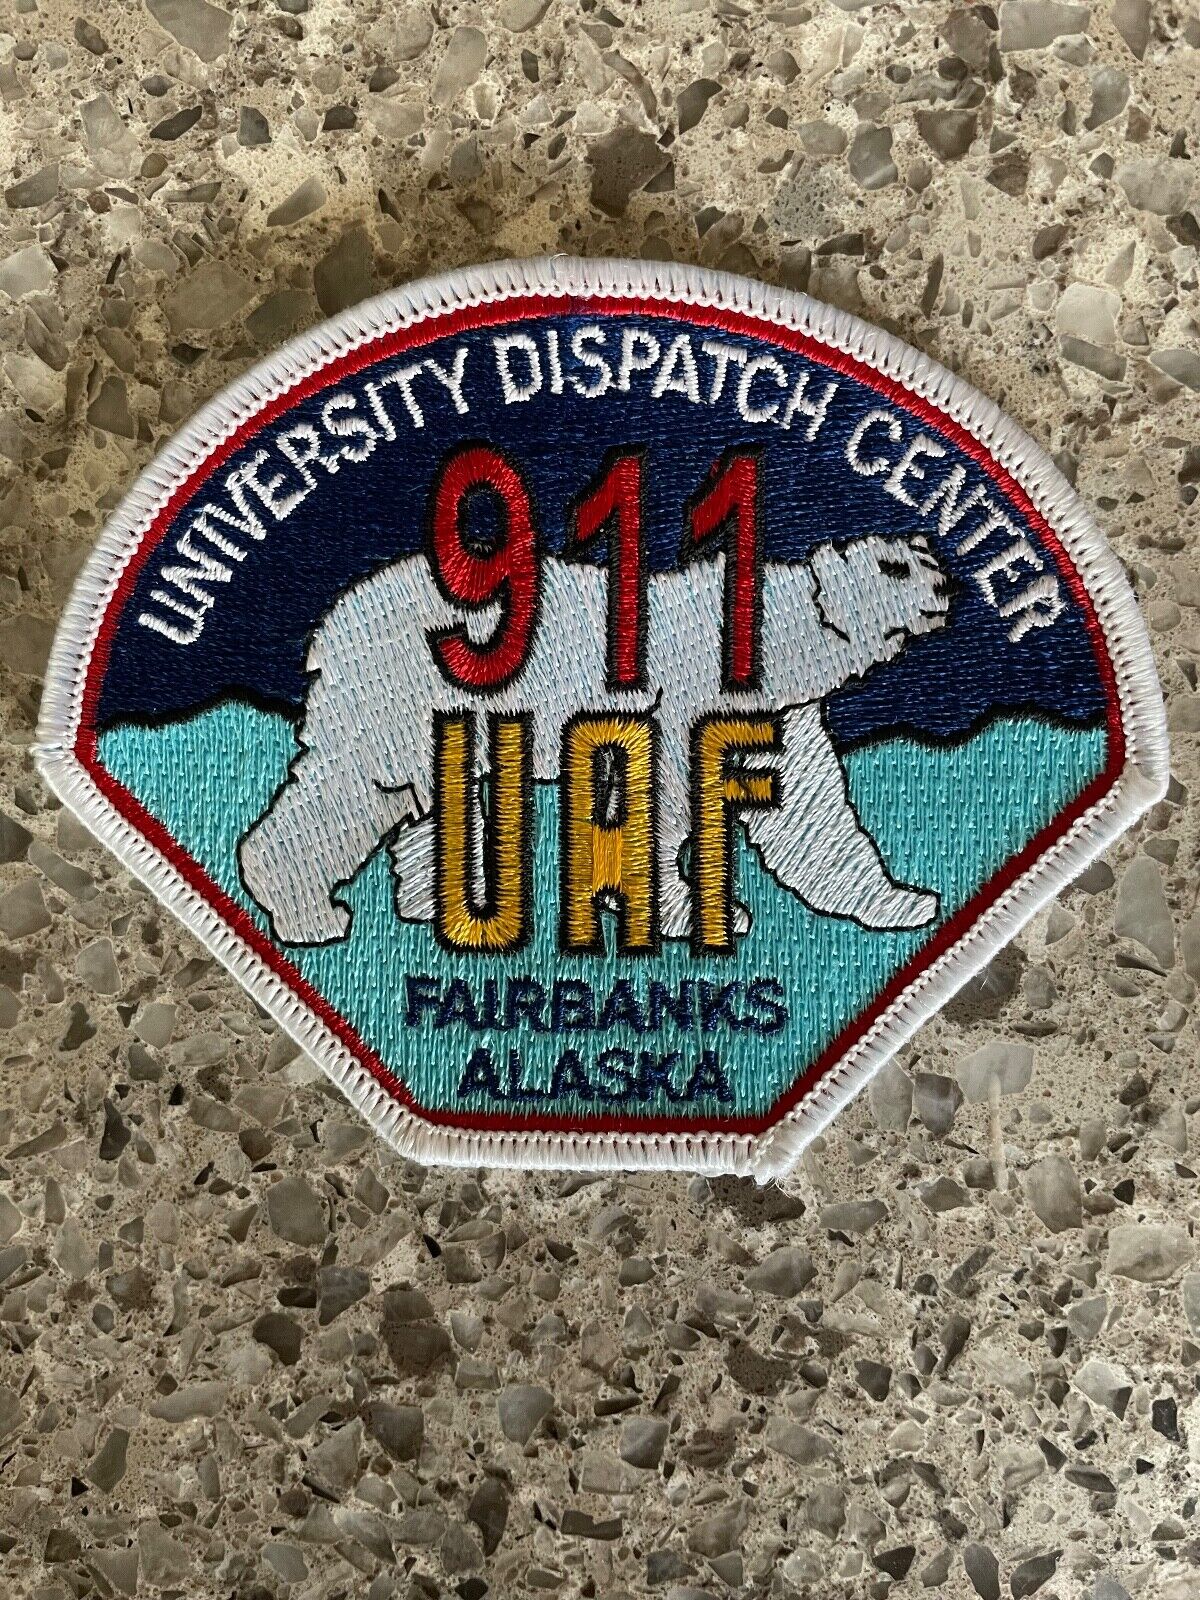 NEW Collectible University of Alaska Fairbanks Dispatch 911 Shoulder Patch